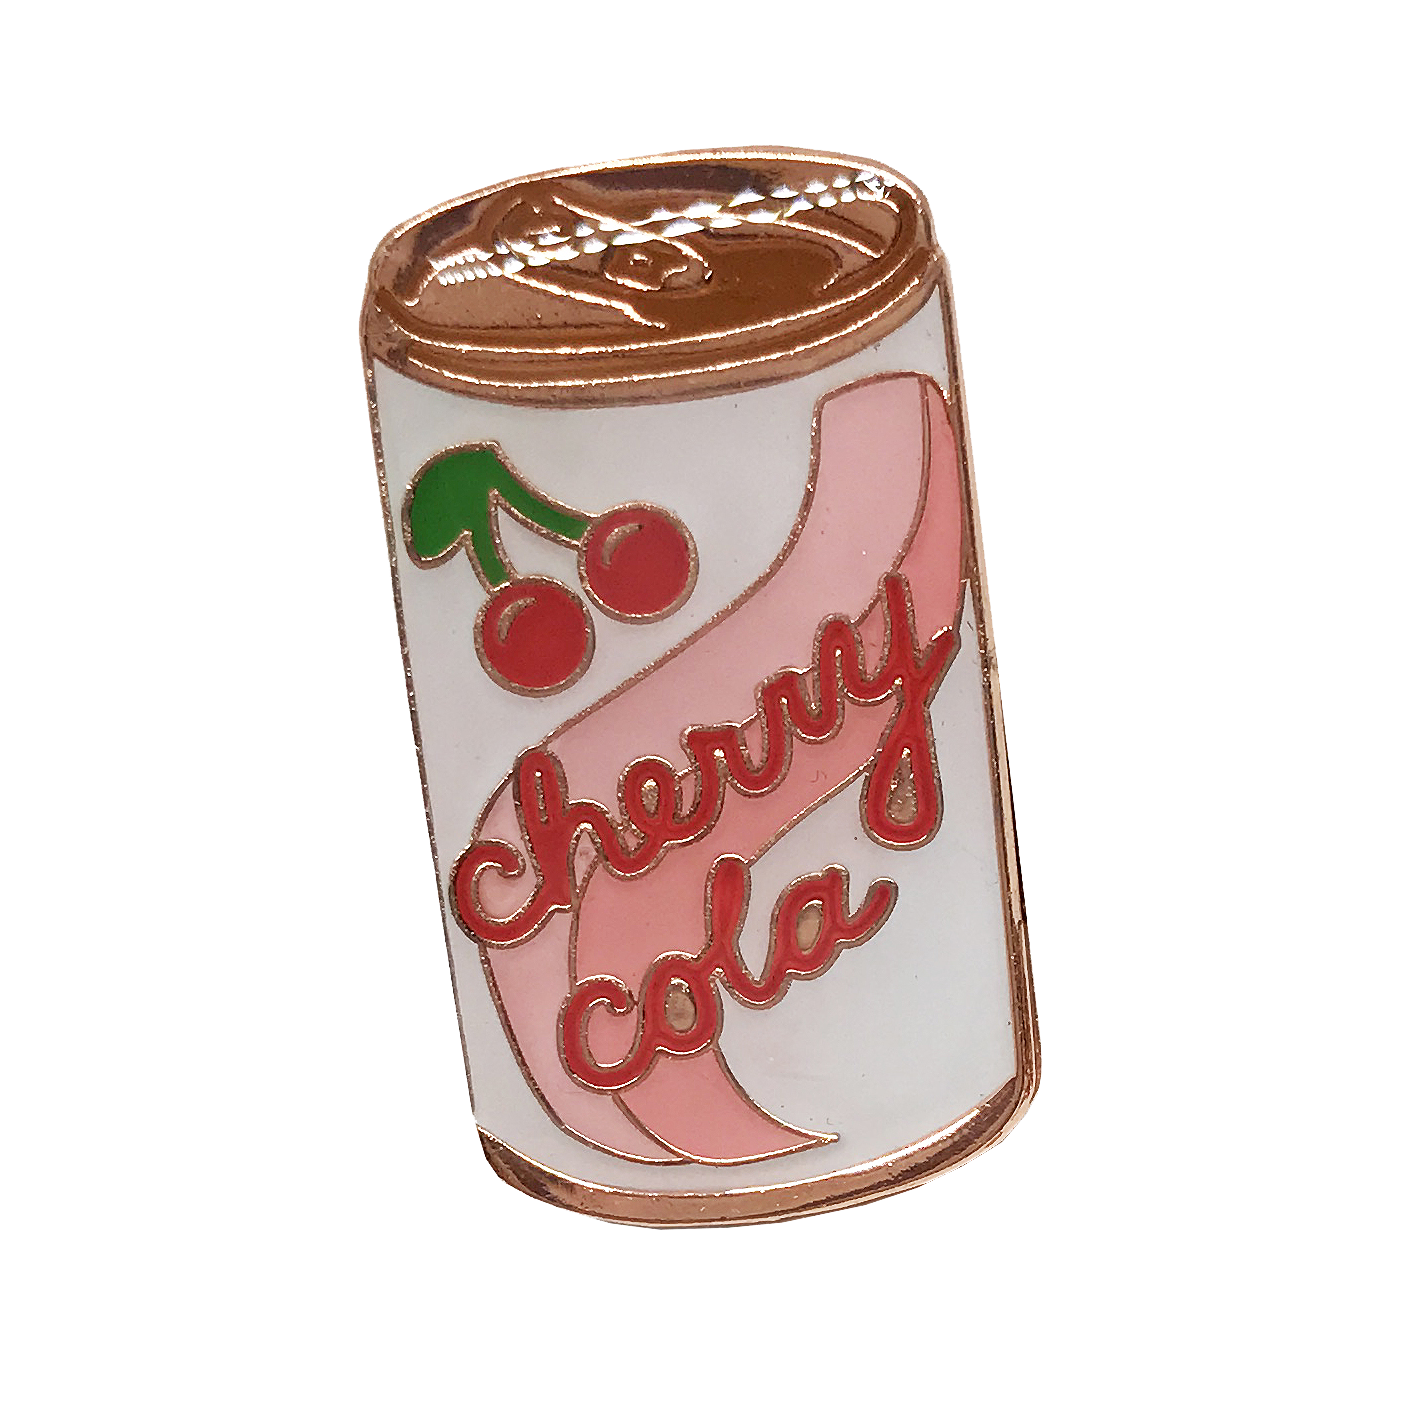 Cherry Cola Lapel Pin